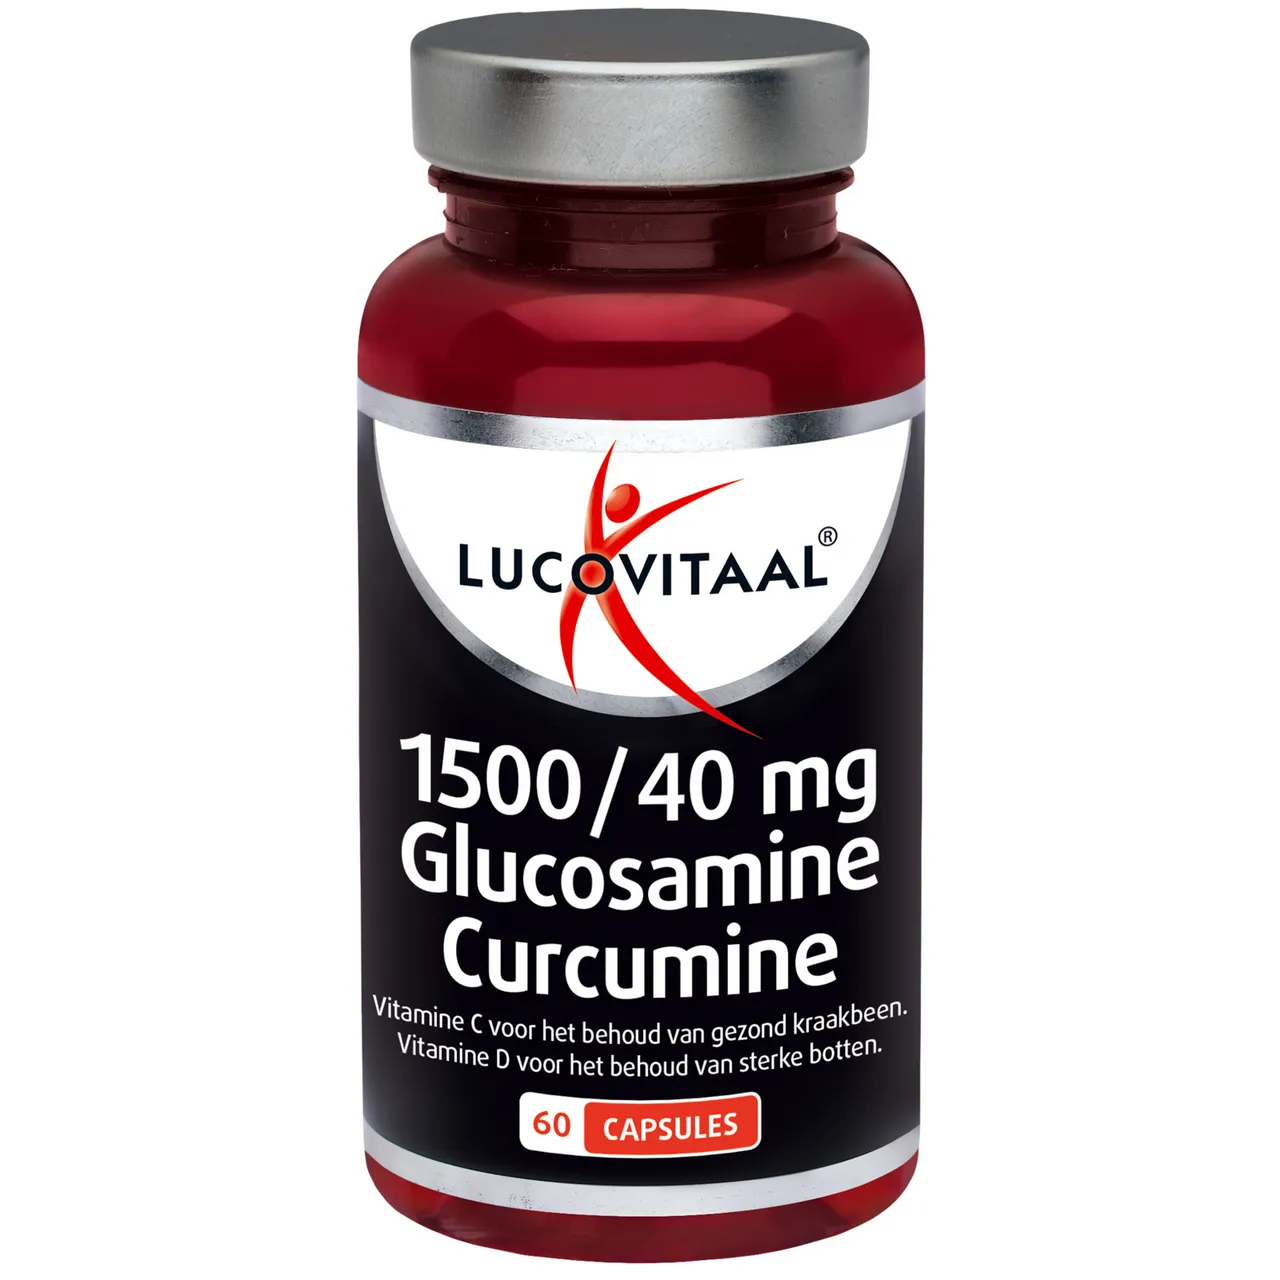 Lucovitaal Glucosamine Curcumine 1500/40mg Capsules